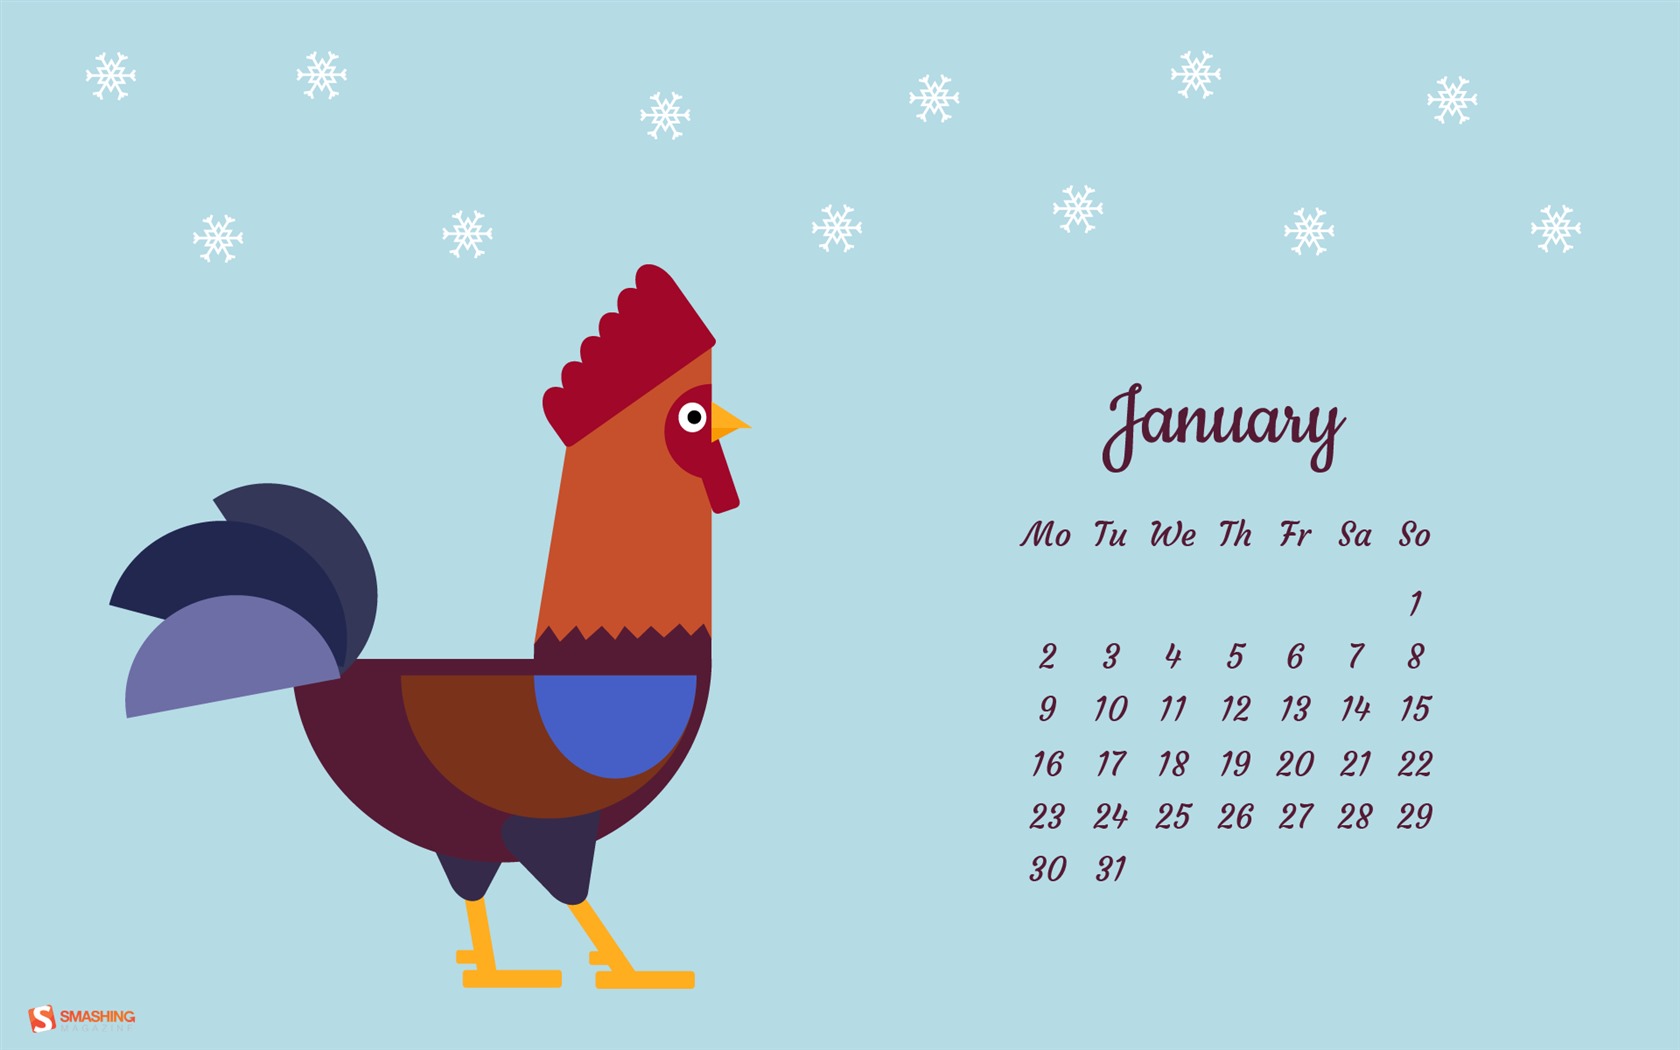 Fondos de calendario de enero de 2017 (2) #15 - 1680x1050